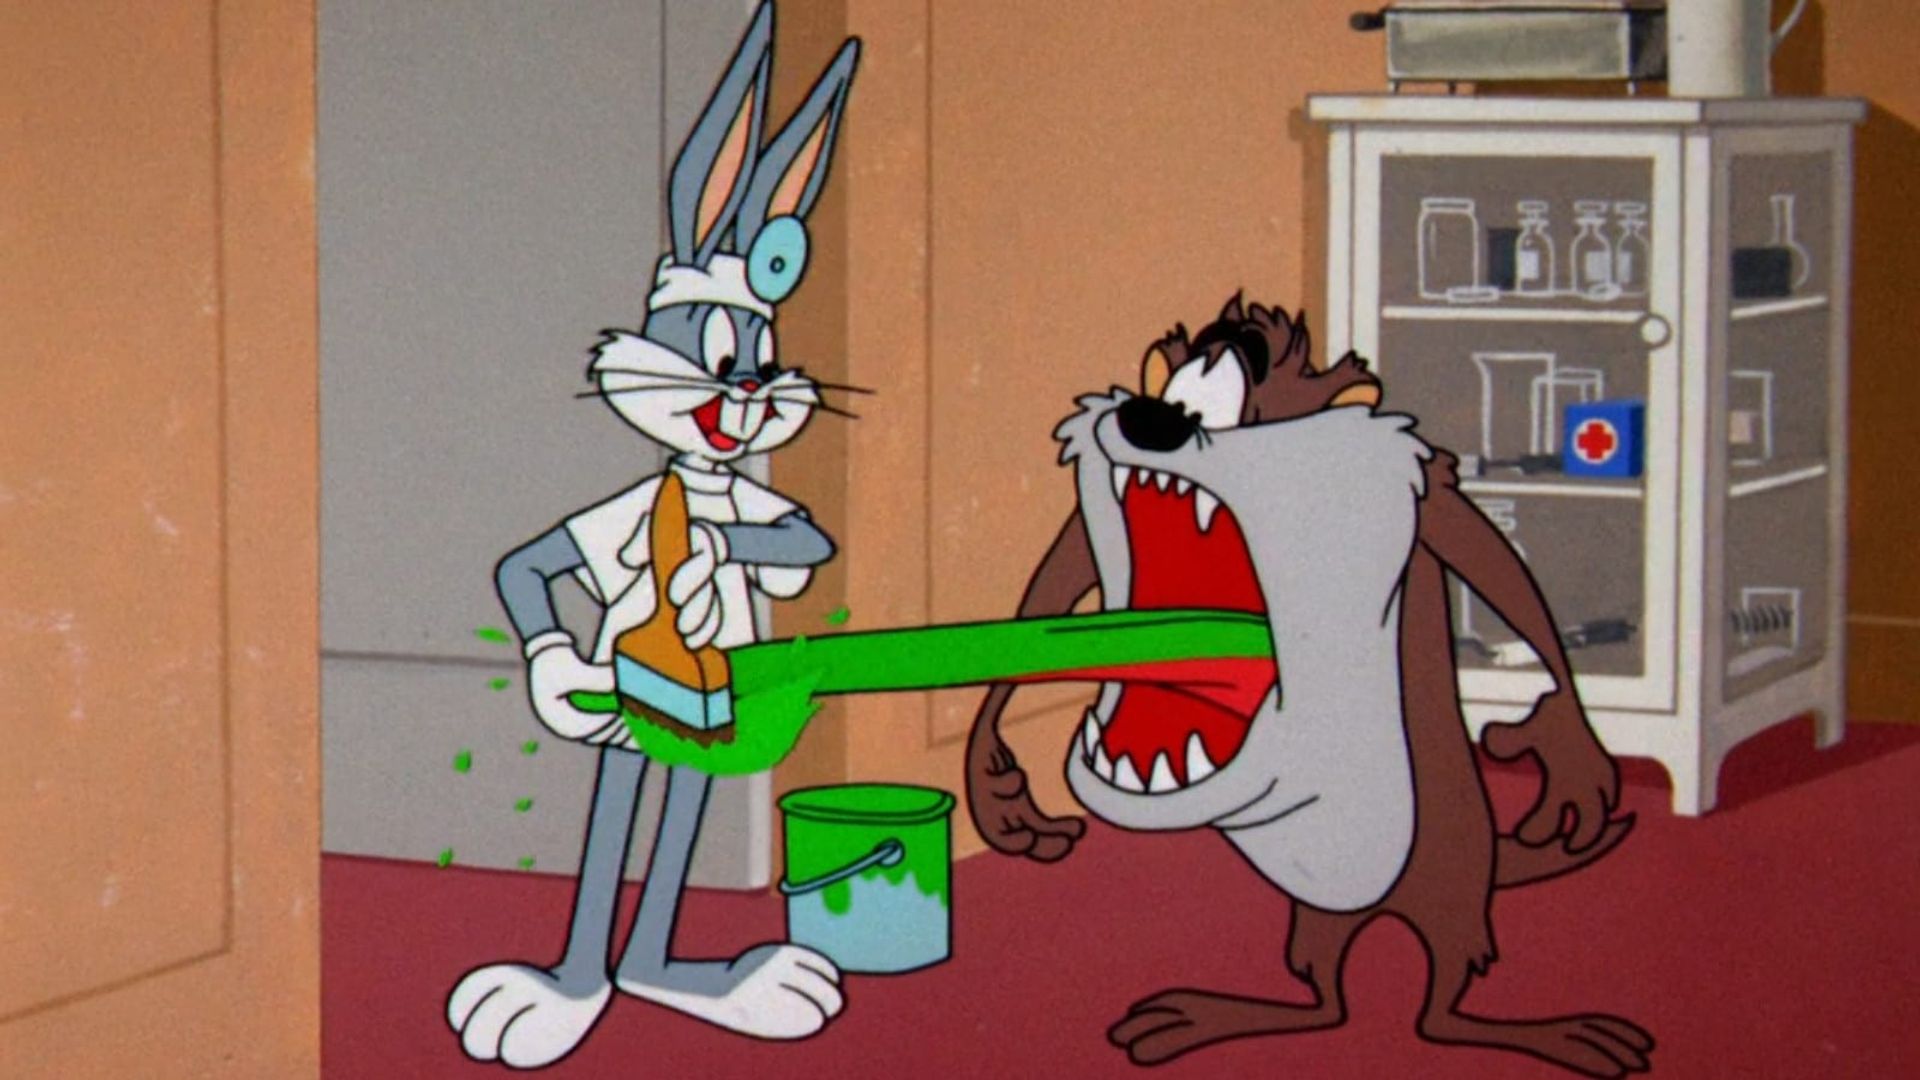 Dr. Devil and Mr. Hare background